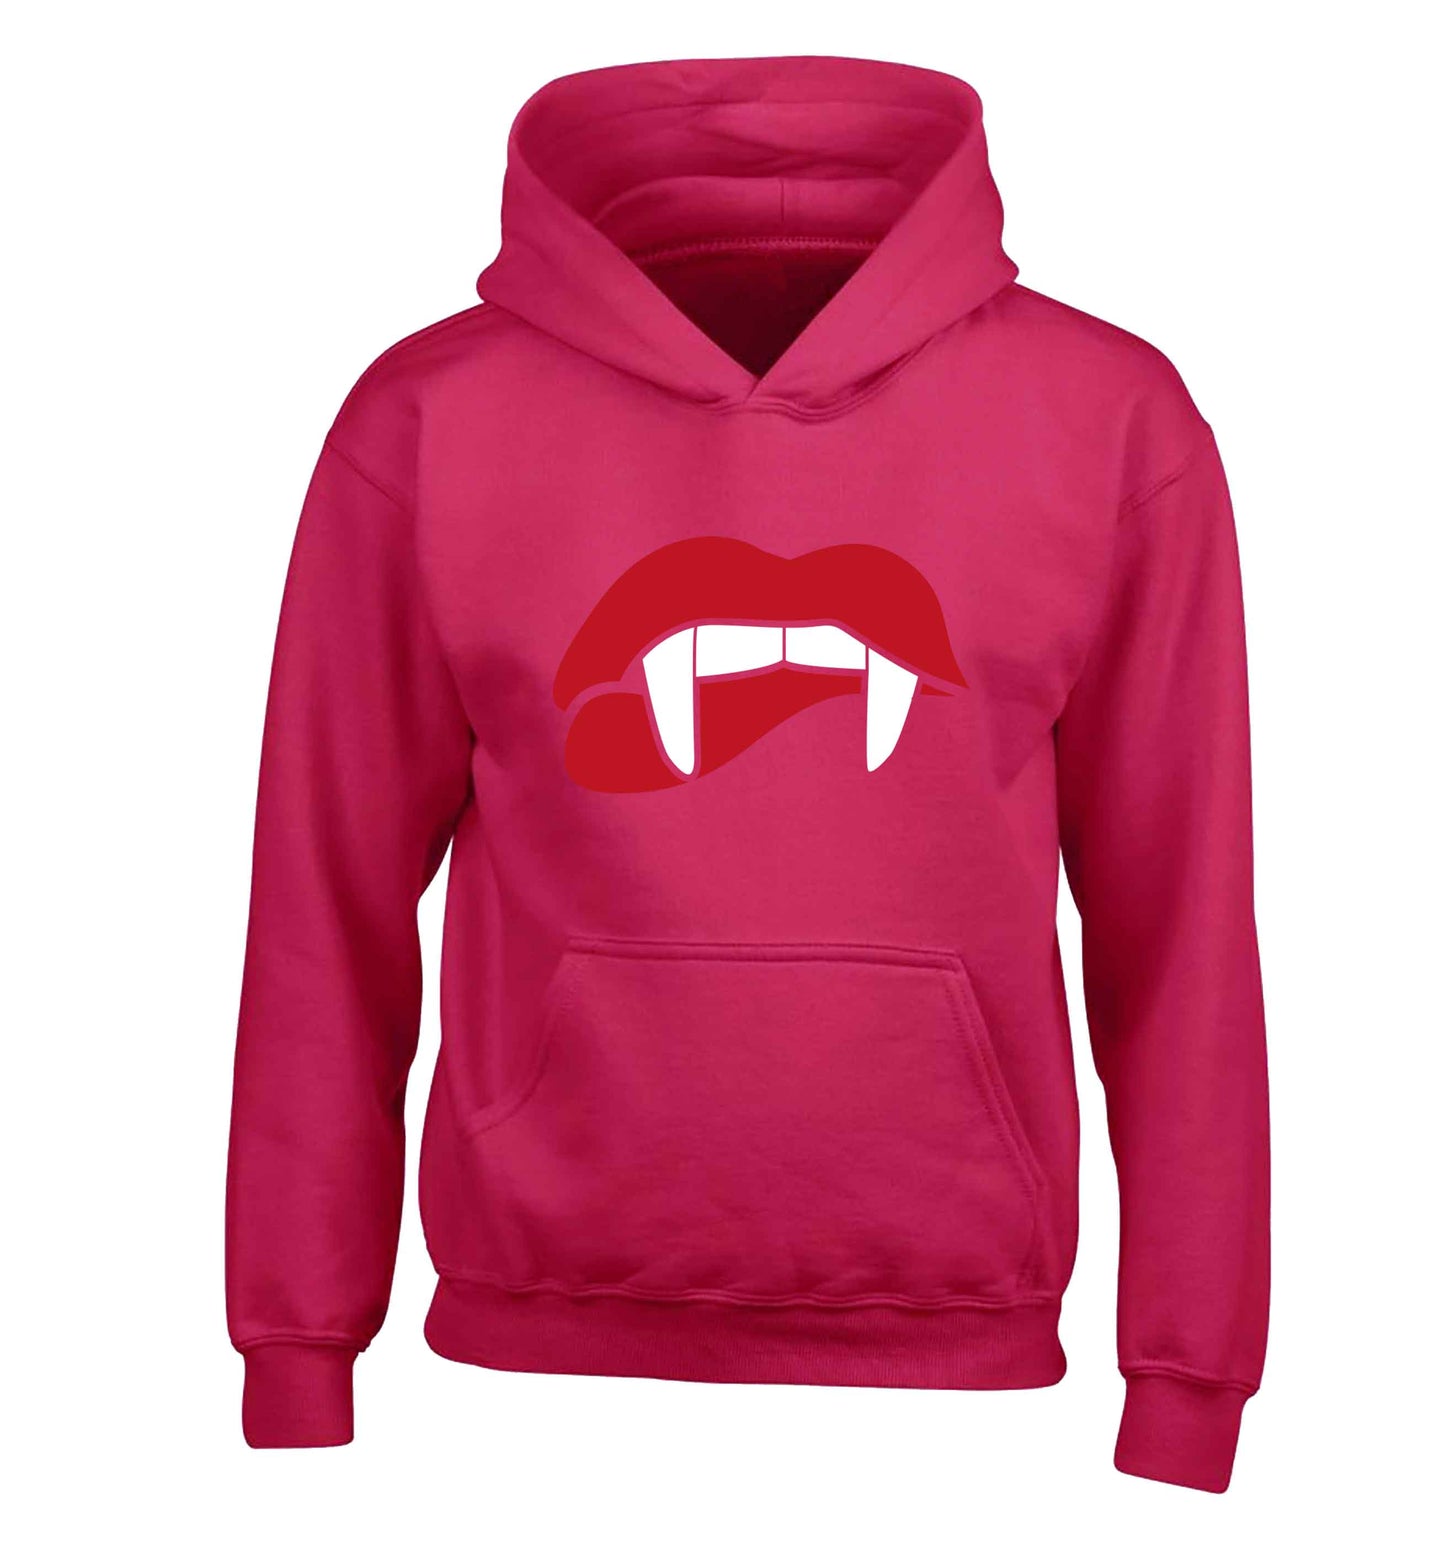 Vampire fangs children's pink hoodie 12-13 Years